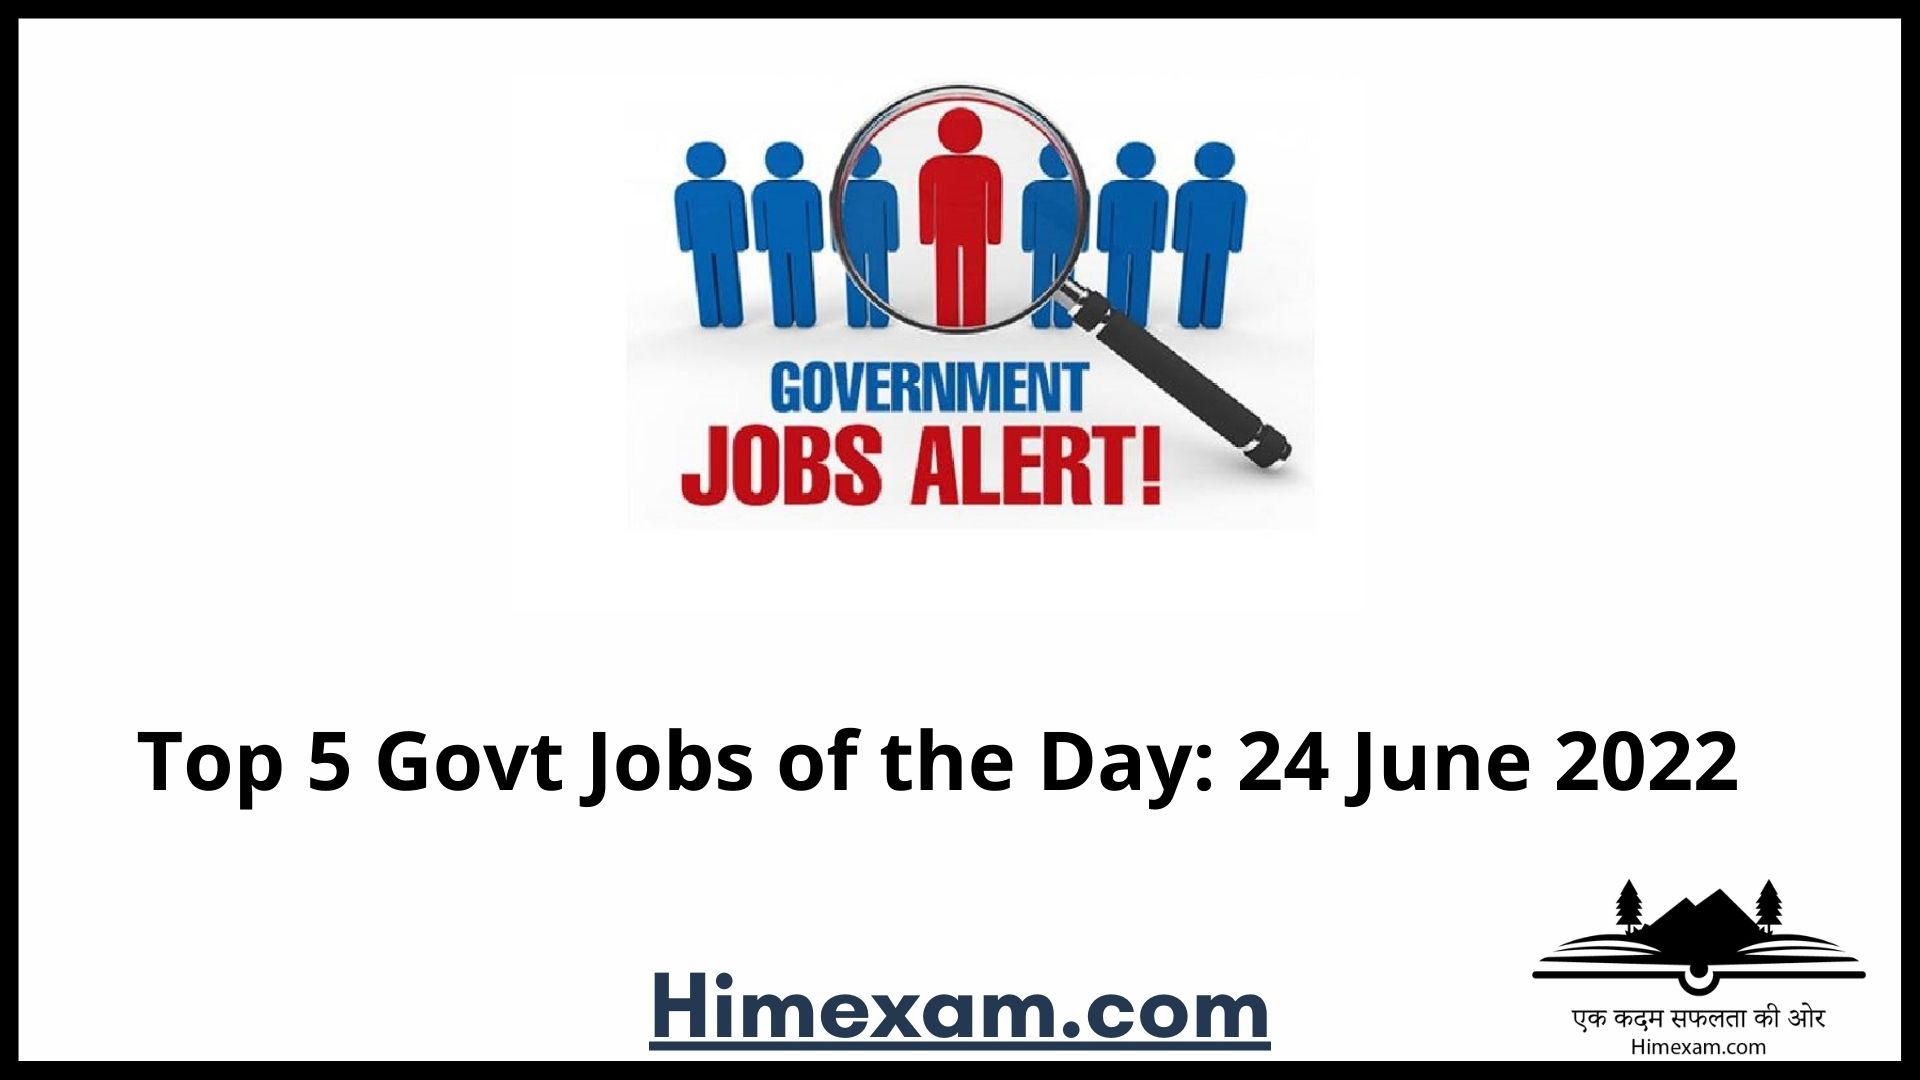 Top 5 Govt Jobs of the Day: 24 June 2022